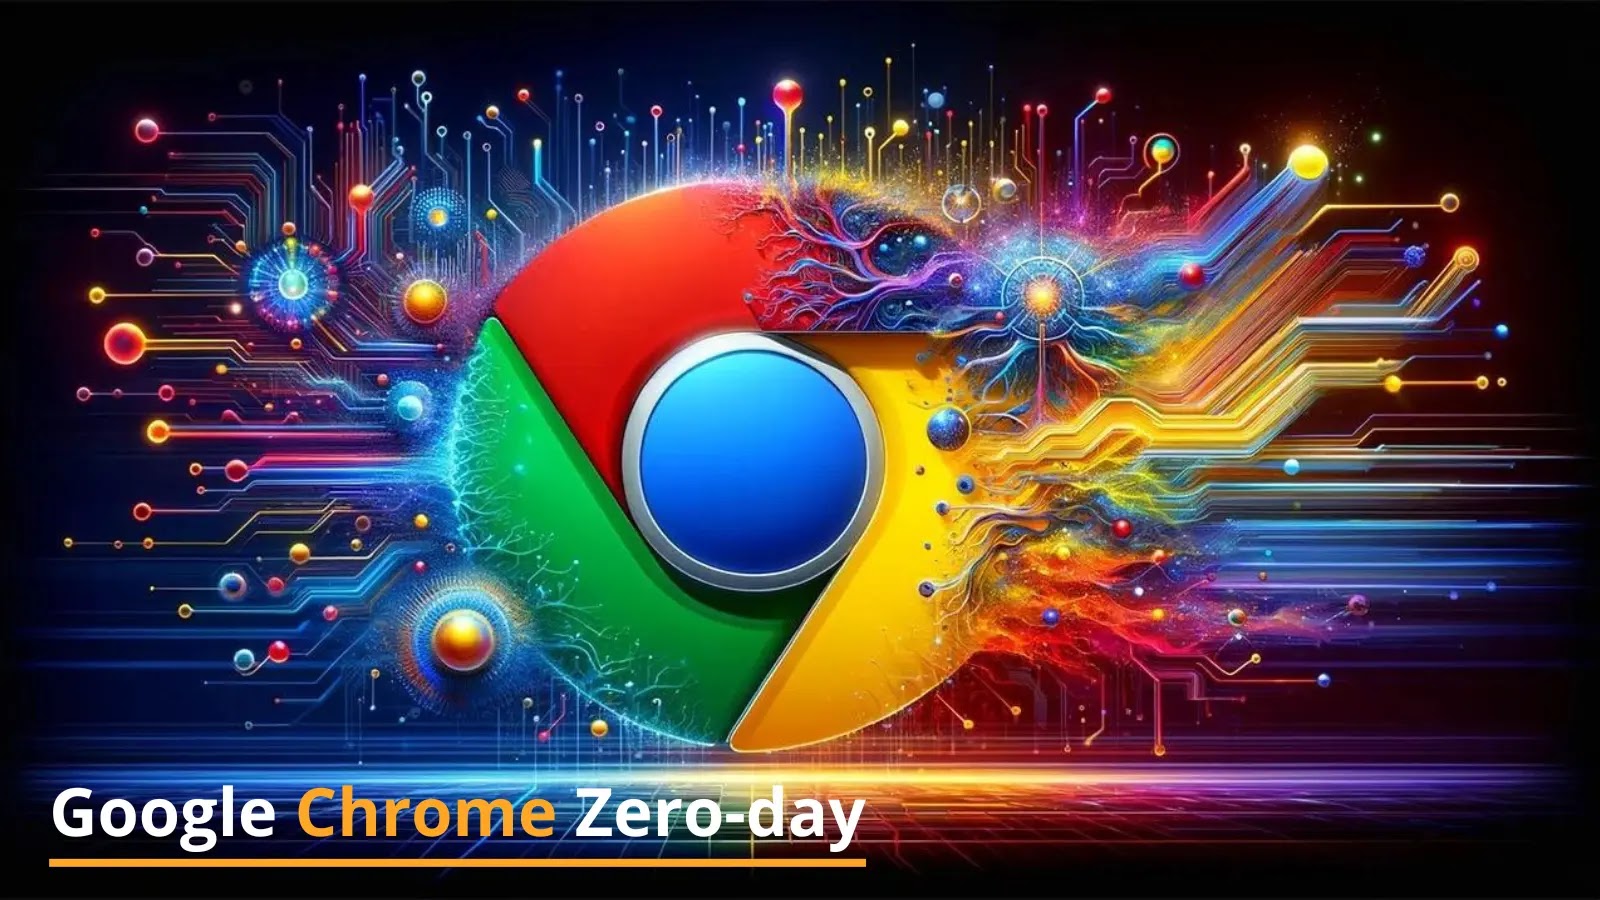 Warning! Google Chrome Zero-day Vulnerability Exploited in Wild